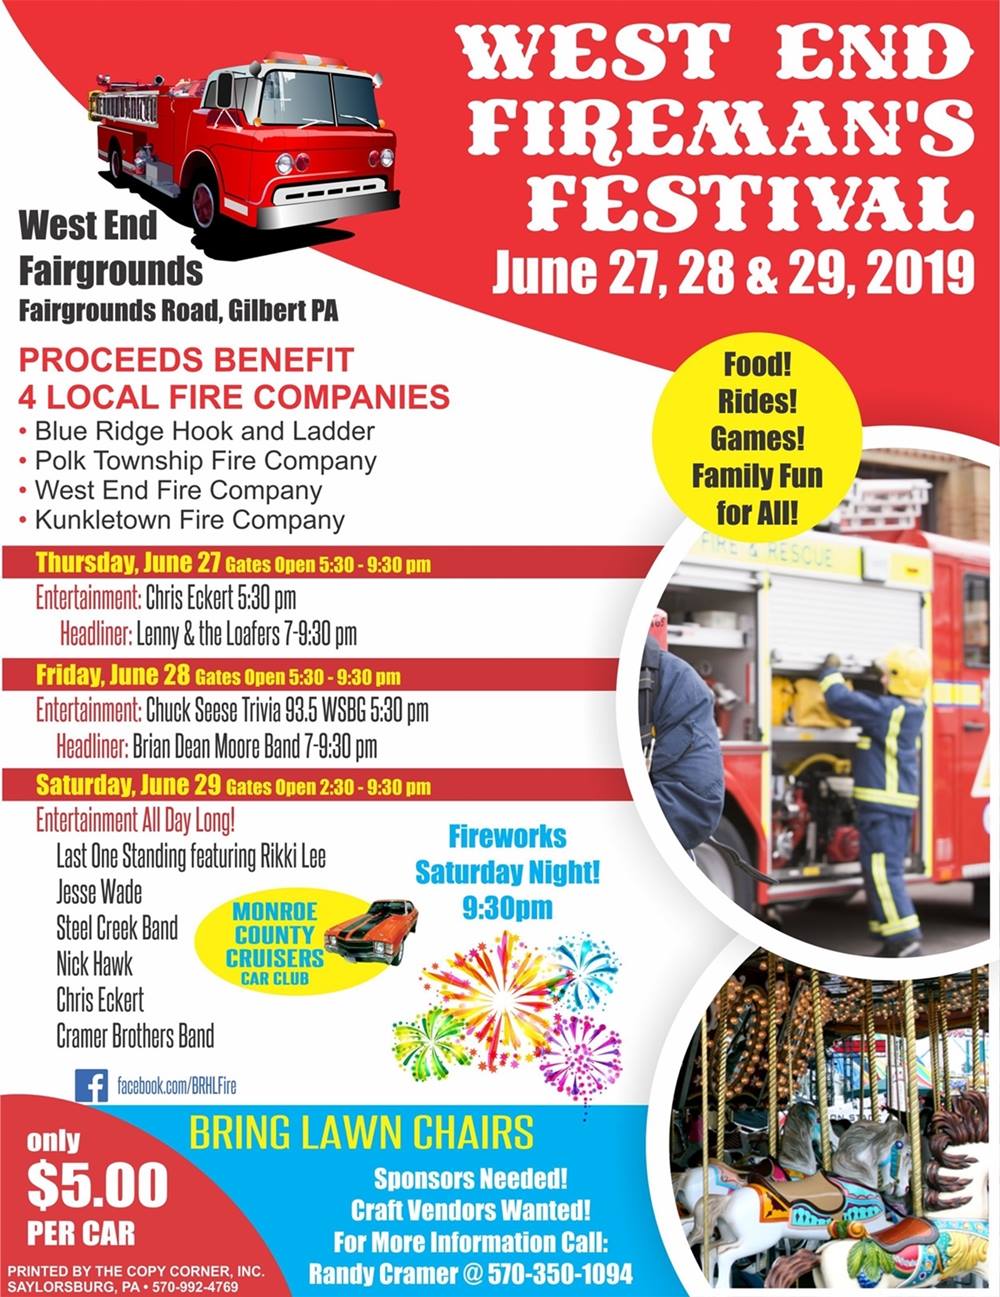 West End Fireman’s Festival Starts Tomorrow June 27th, 2019 through